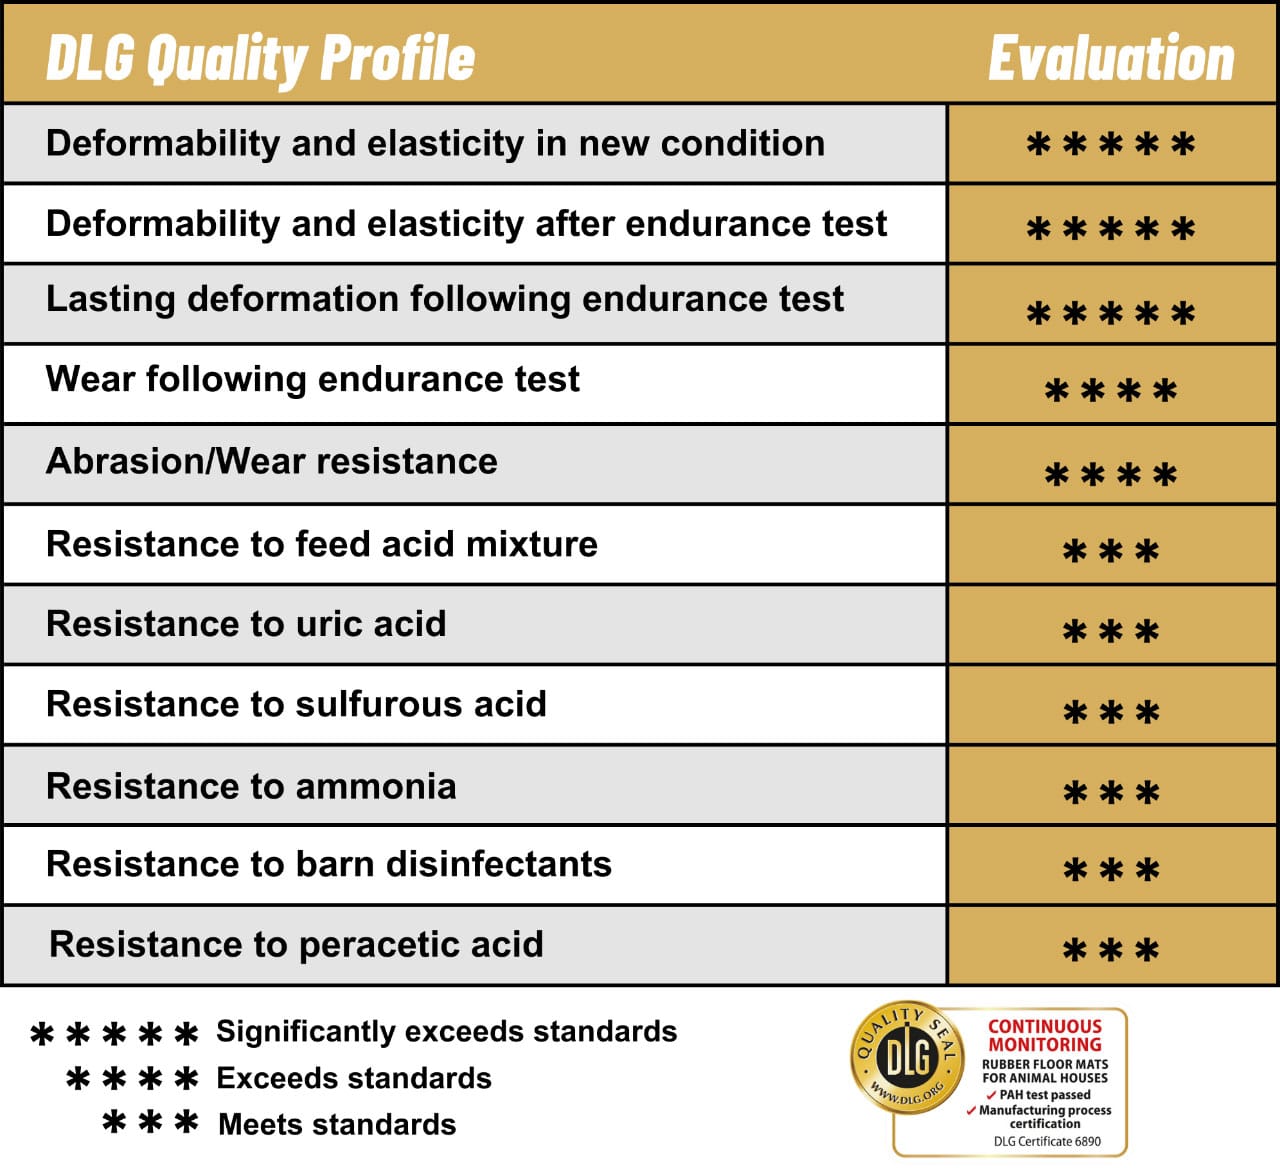 KRAIBURG DLG Profile quality evaluation.